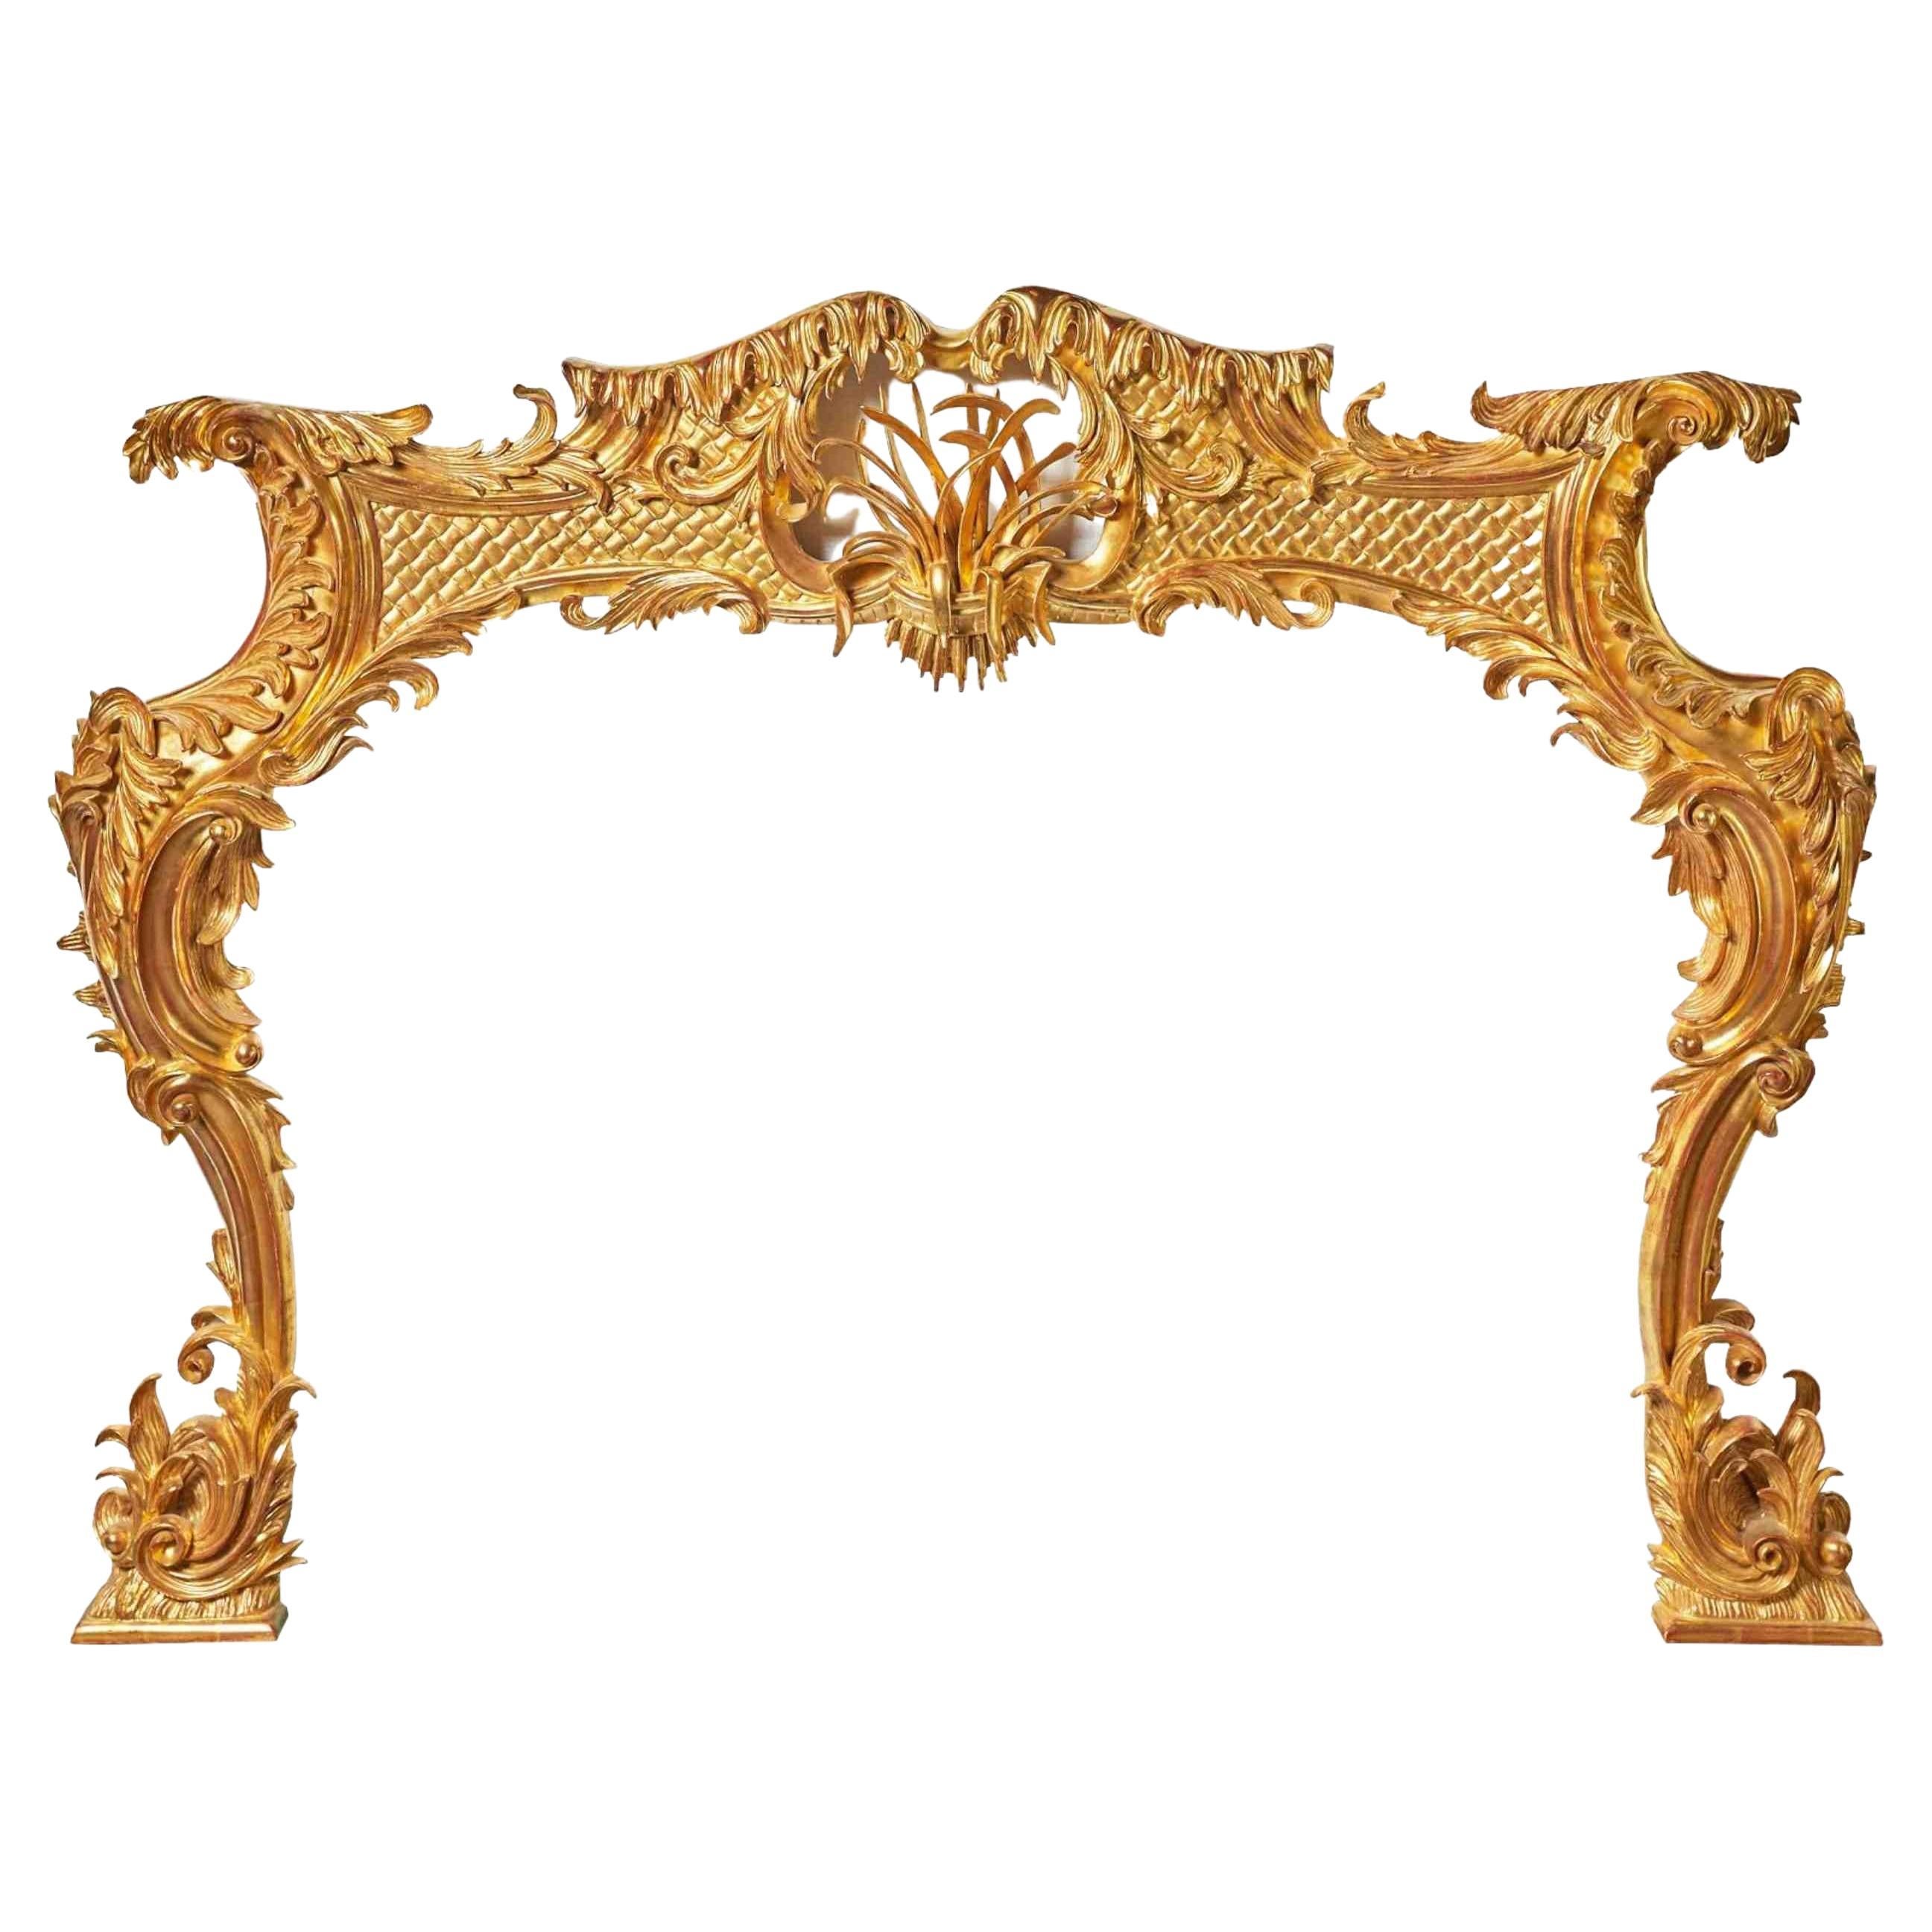 Vergoldeter Holzkamin im Rokoko-Stil des 18. Jahrhunderts